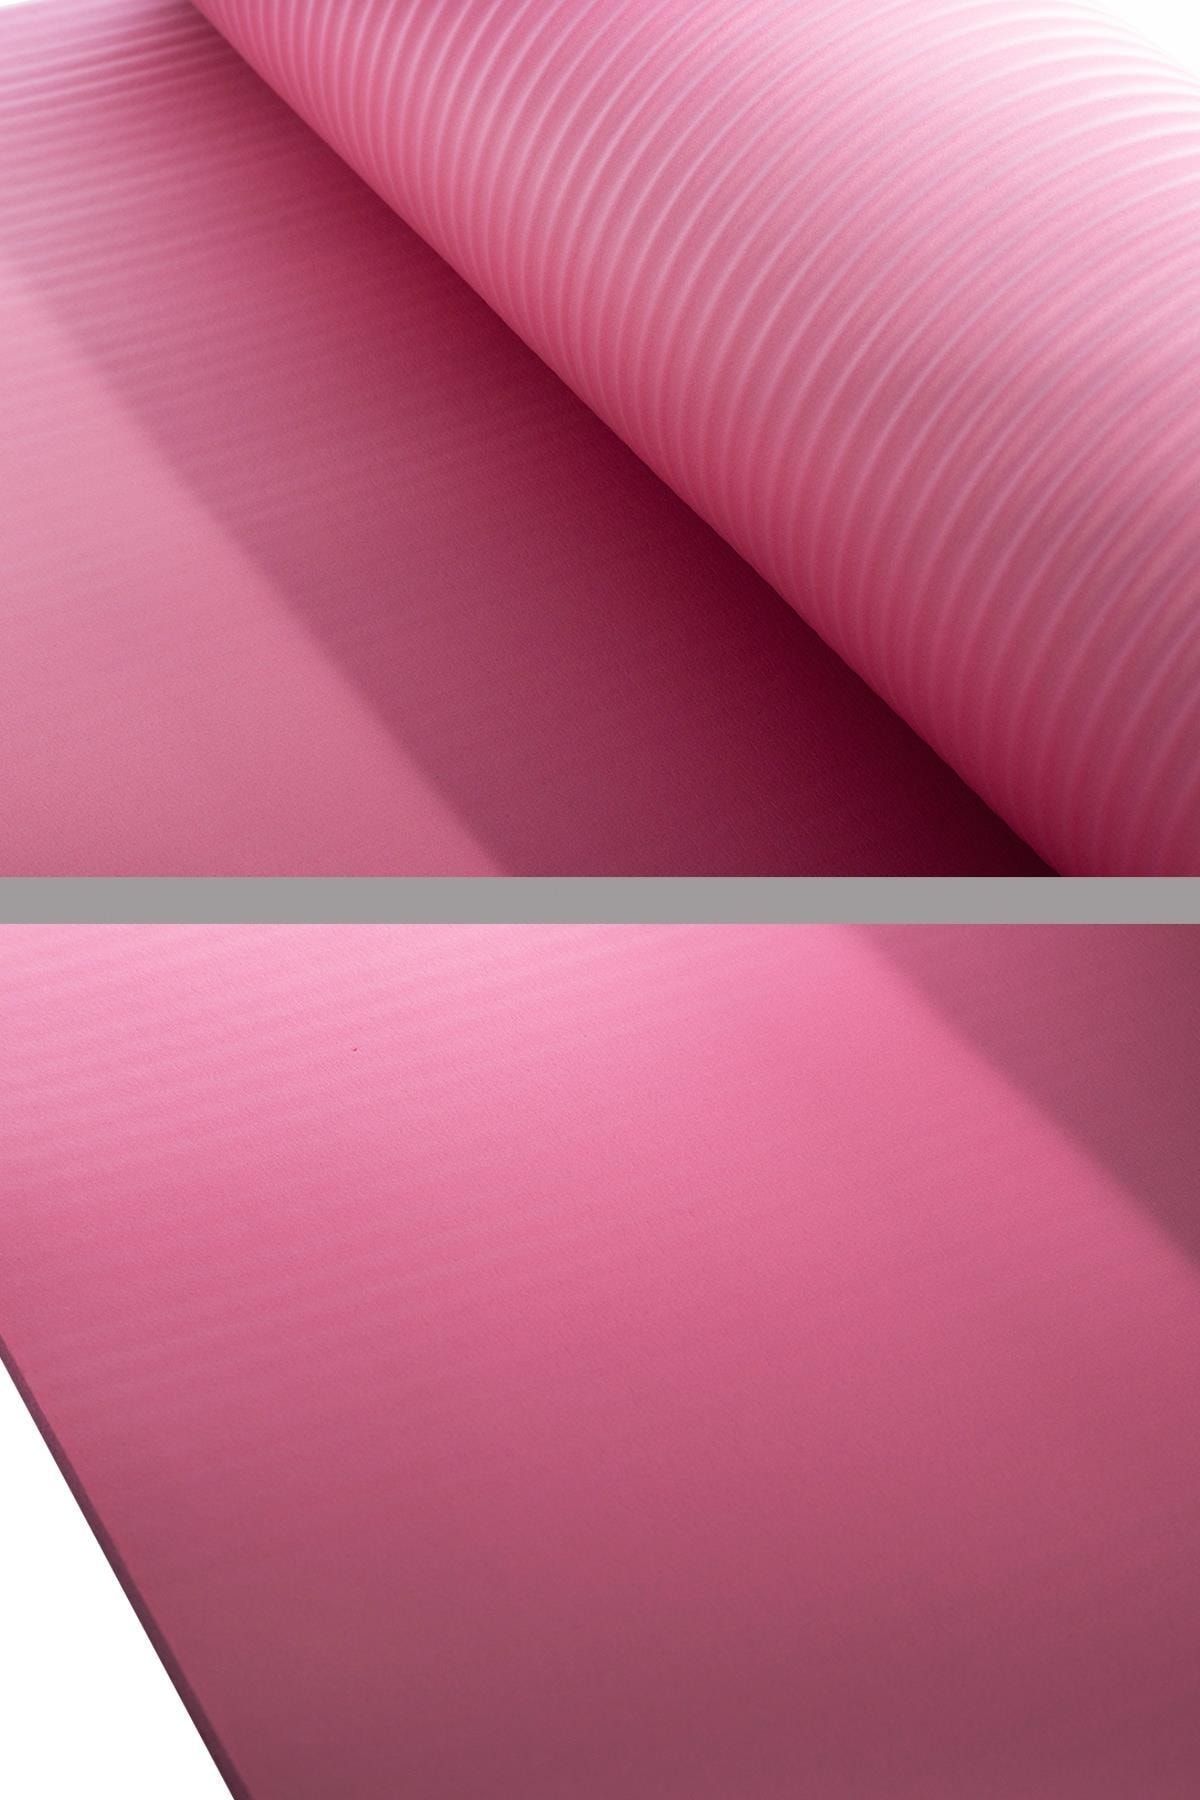 Delta Pilates Mattresses & Mat - Pink - 10 mm - Trendyol